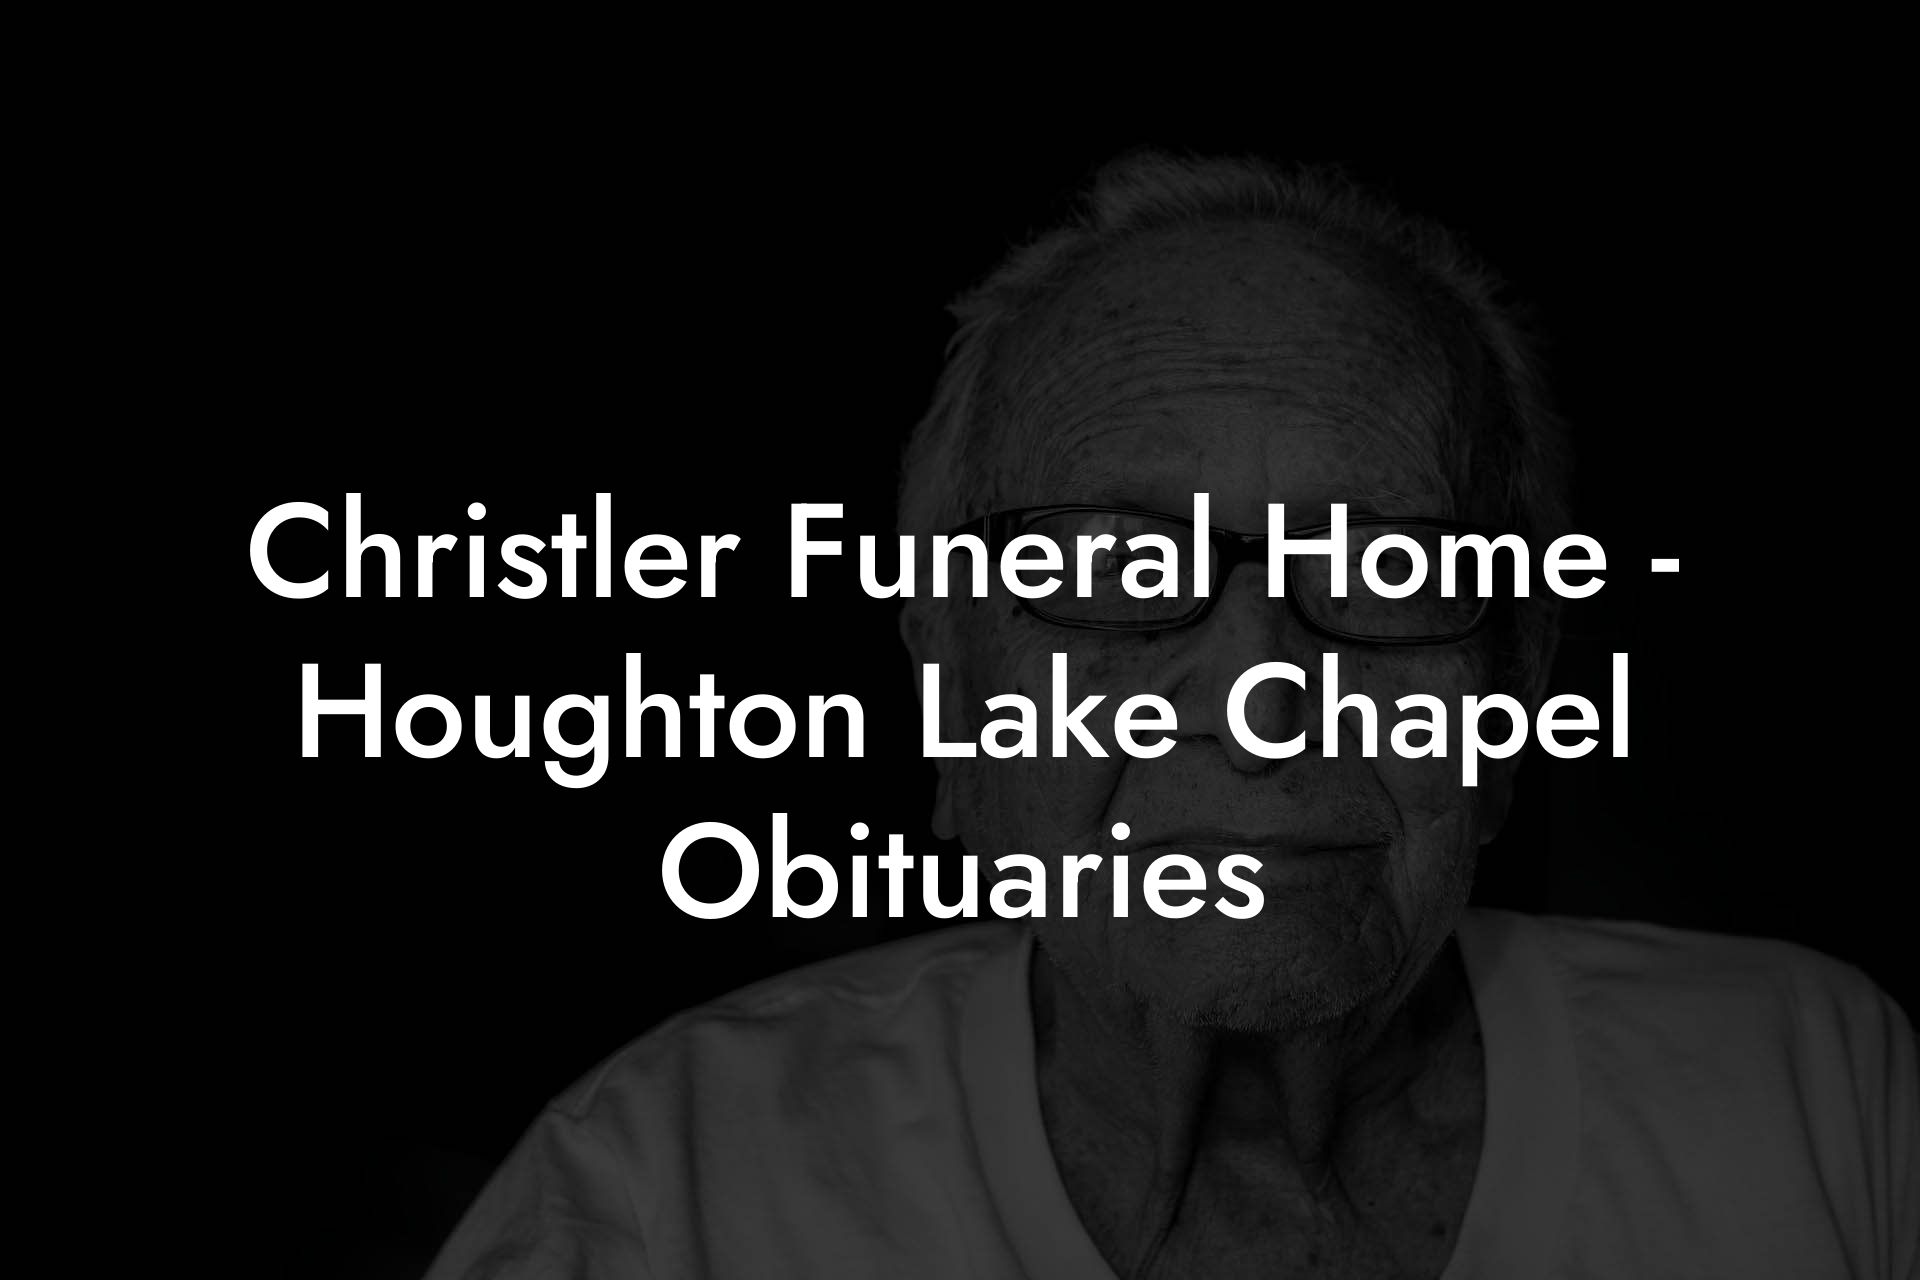 Christler Funeral Home - Houghton Lake Chapel Obituaries